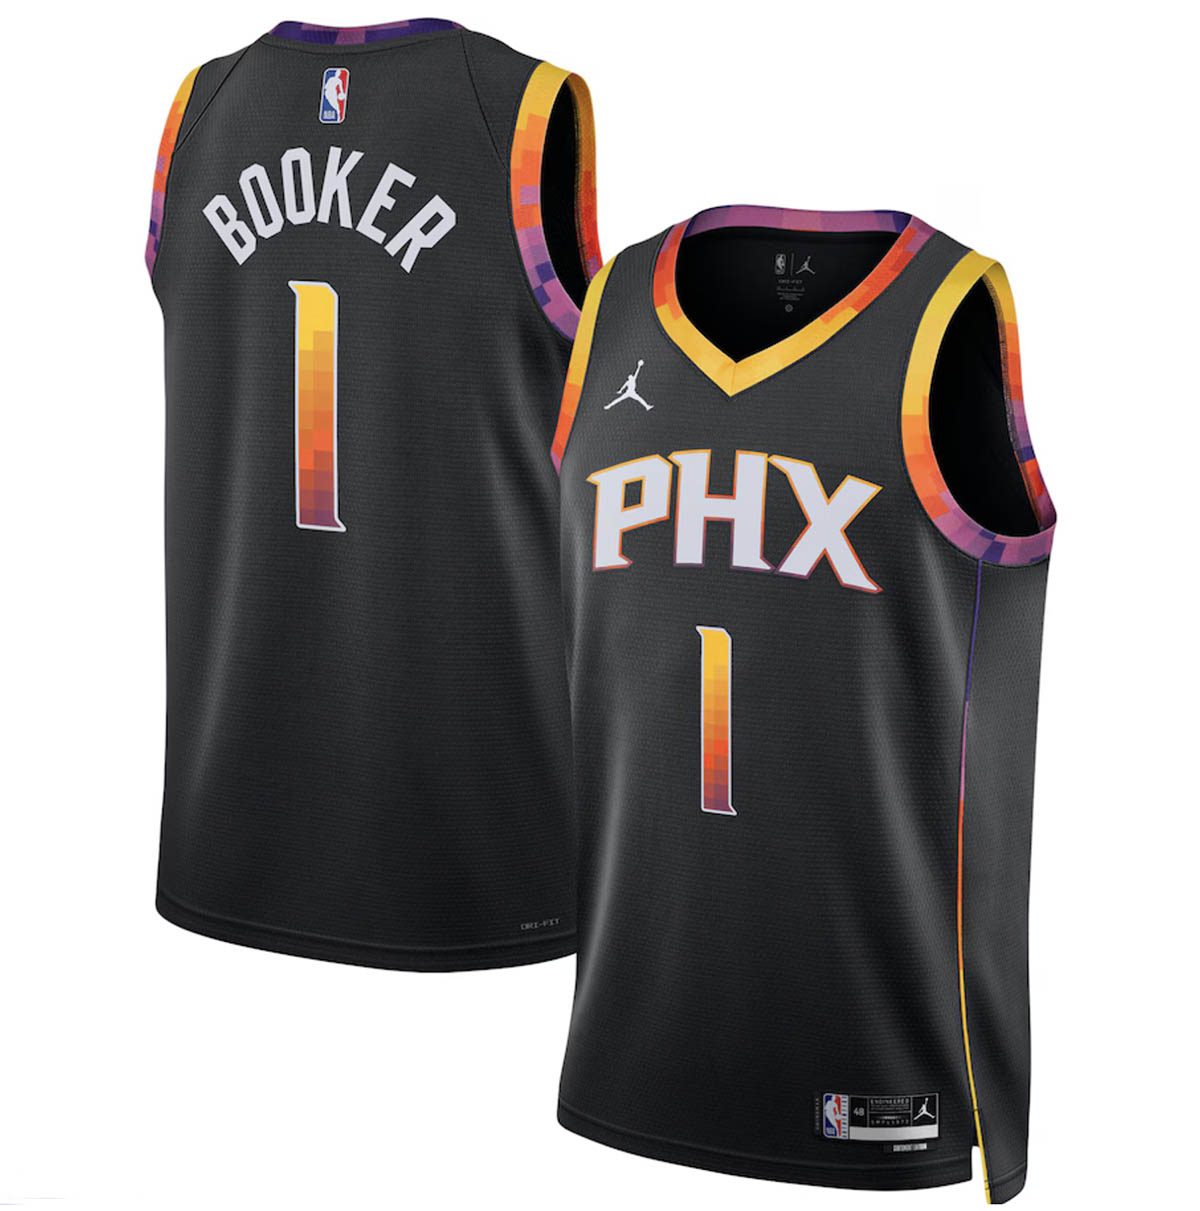 Devin-Booker-Phoenix-Suns-Jordan-Jersey